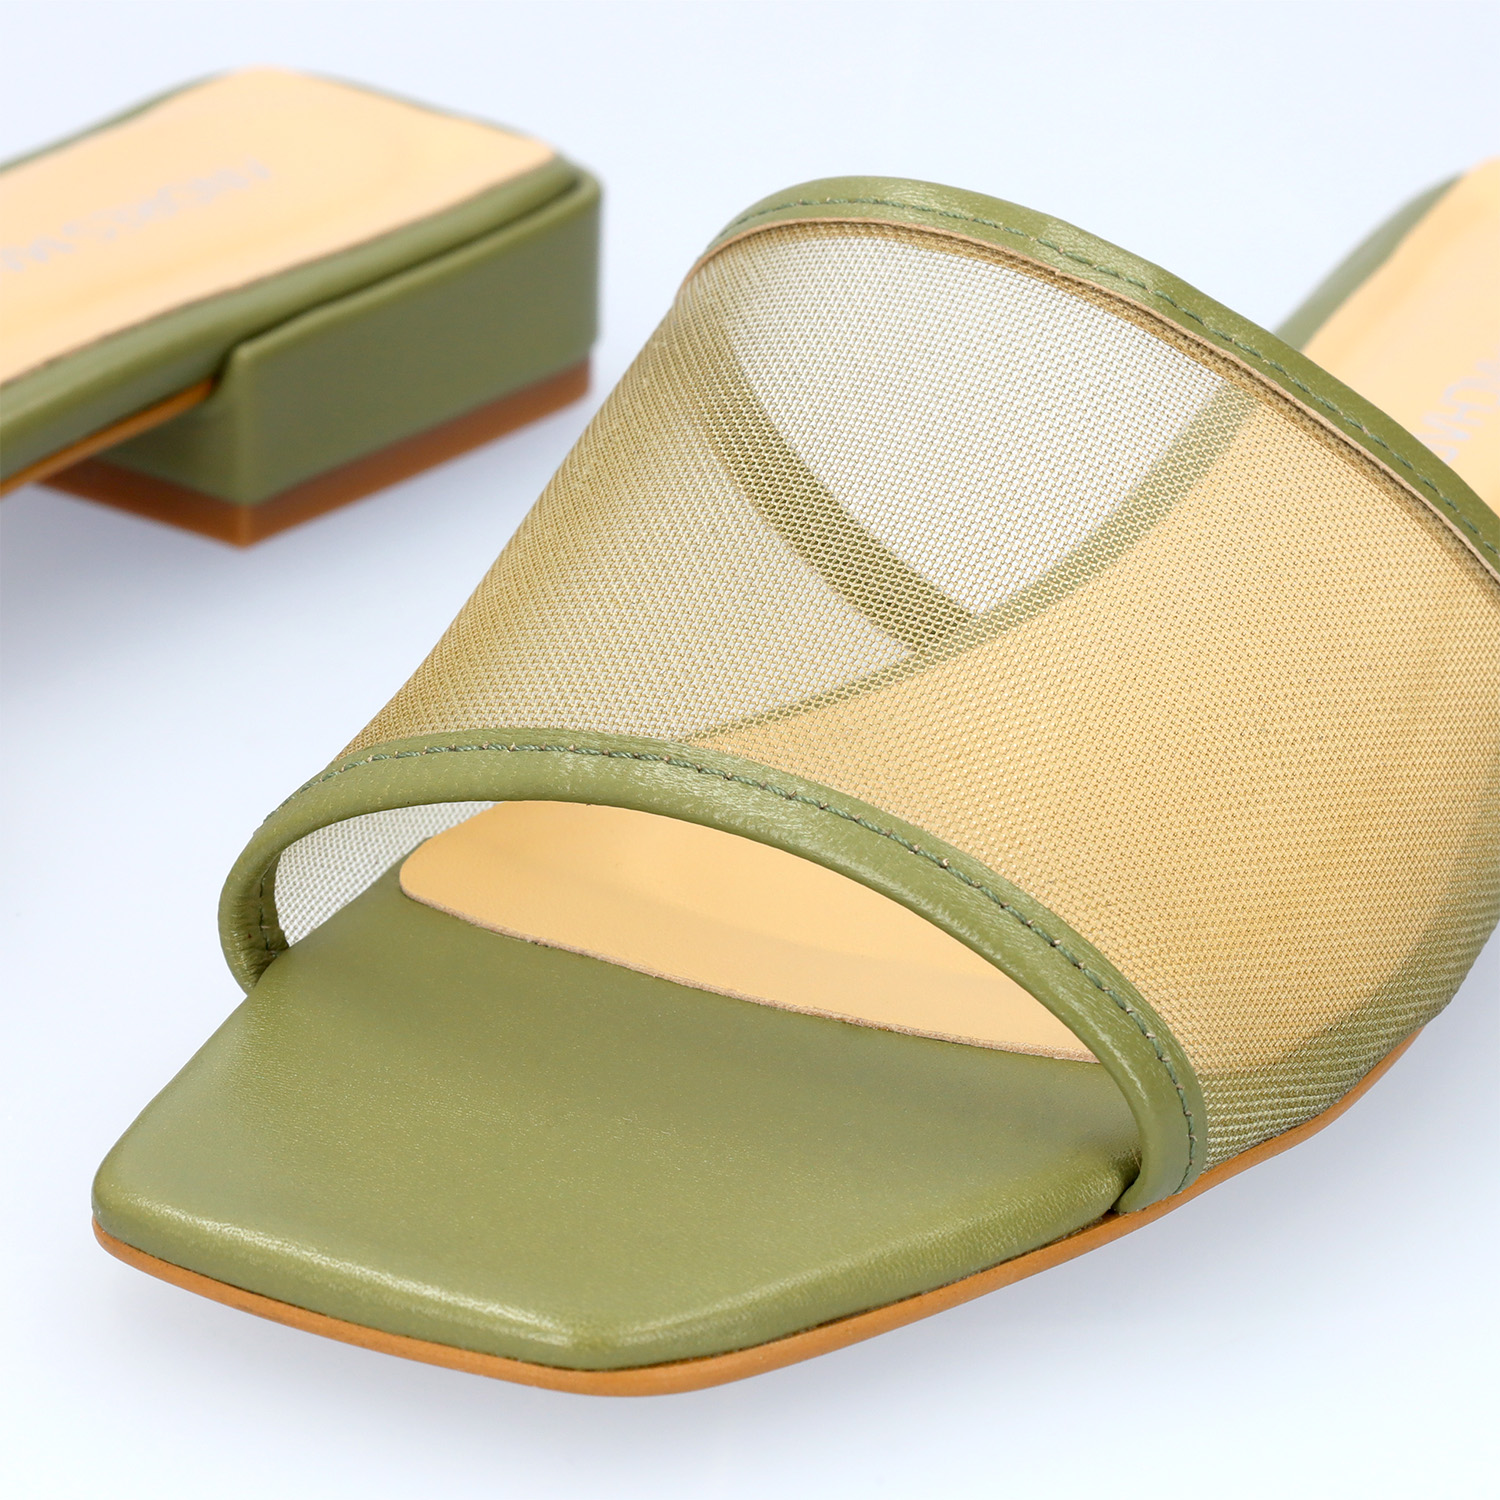 Kaki leather flat sandals 